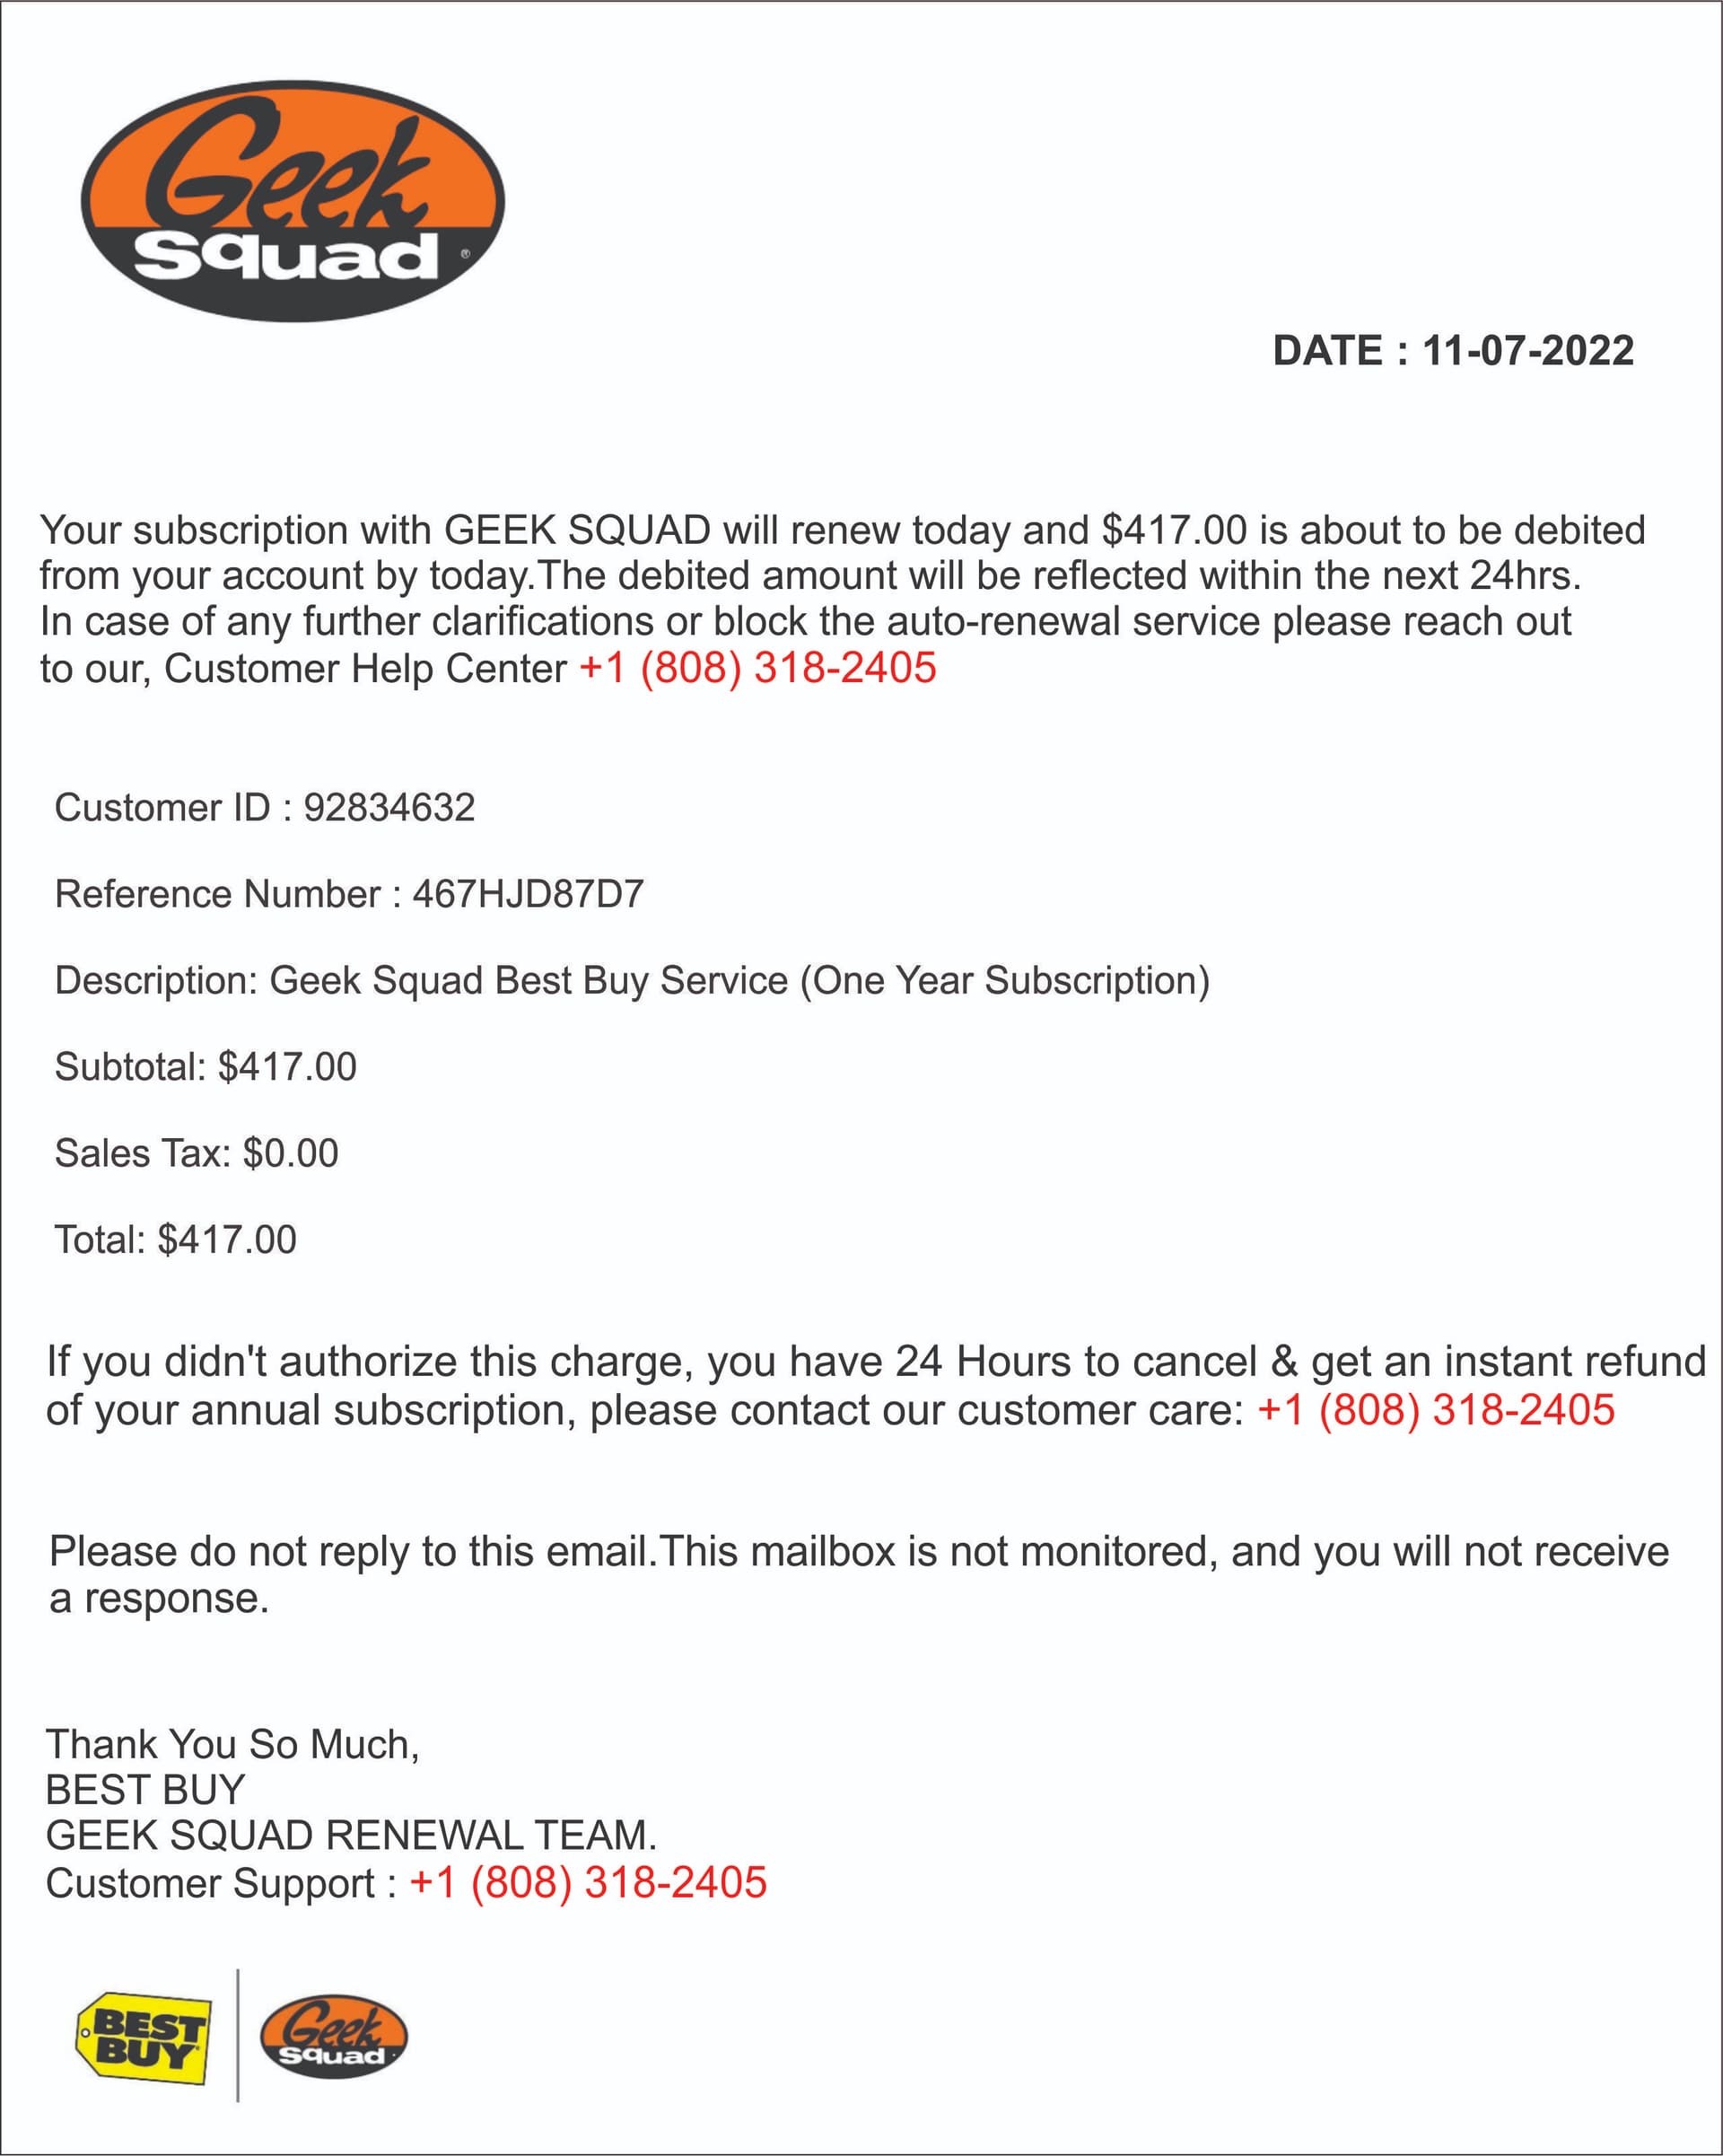 geek-squad-renewal-team-1-808-318-2405-refund-scams